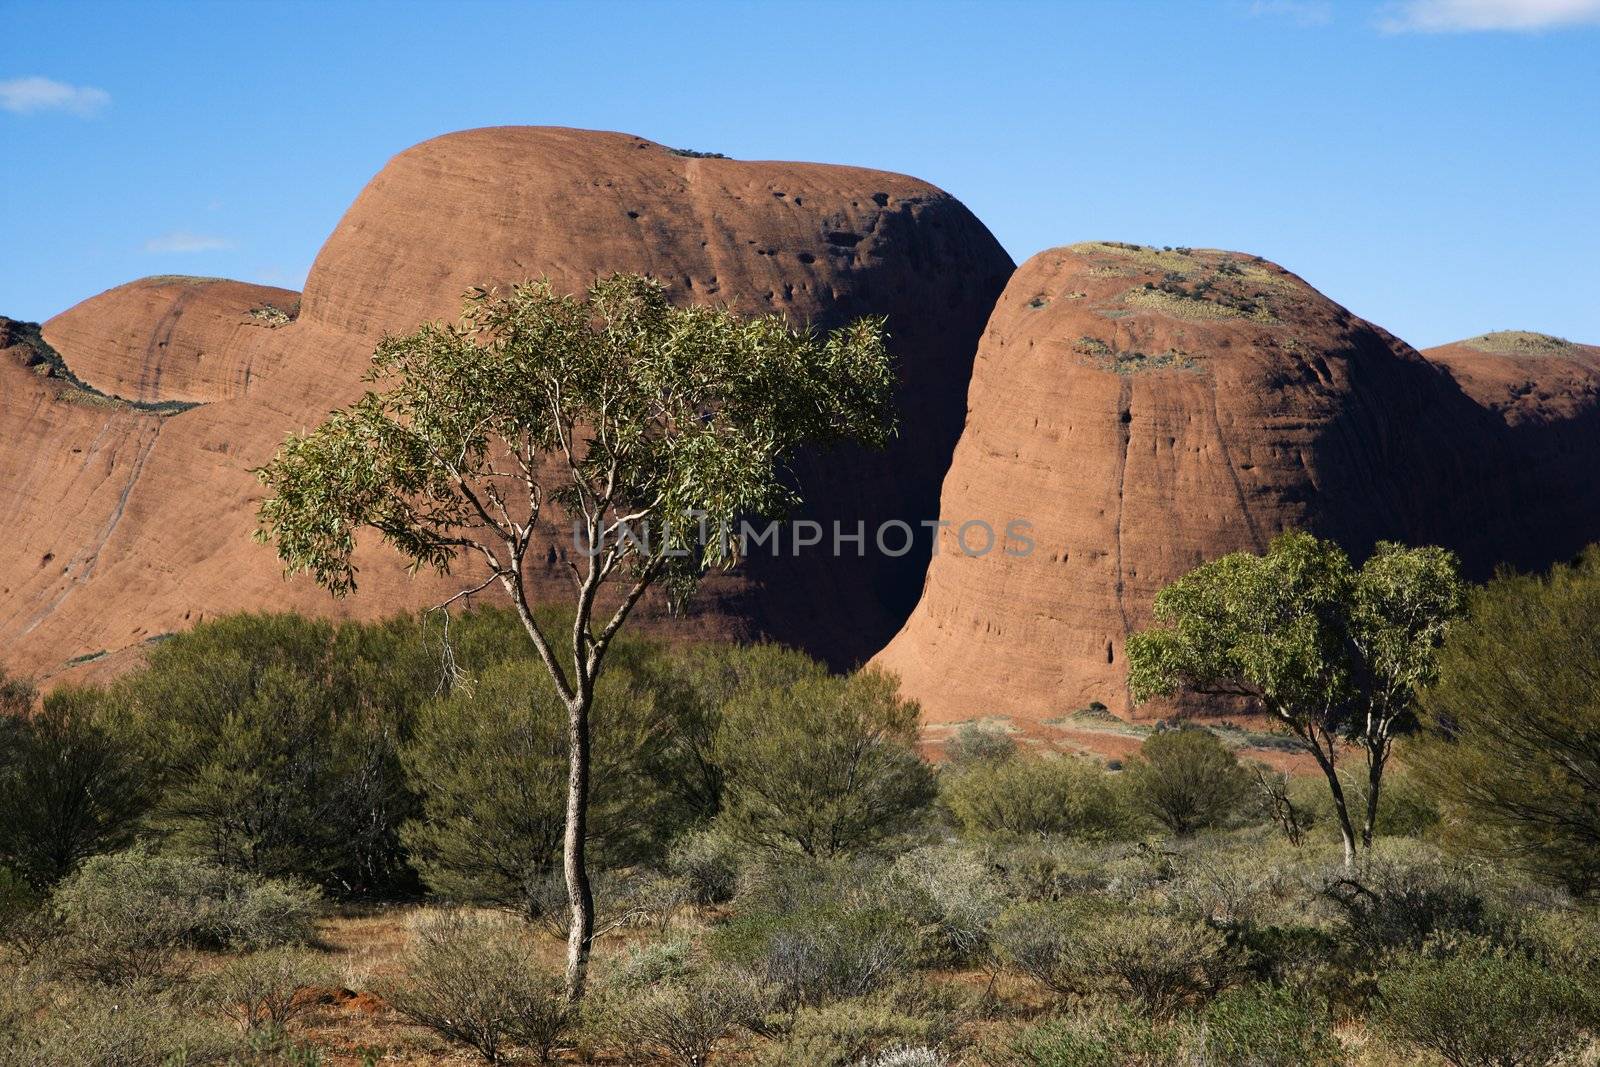 The Olgas rock formation in Uluru Kata Tjuta National Park, Australia.